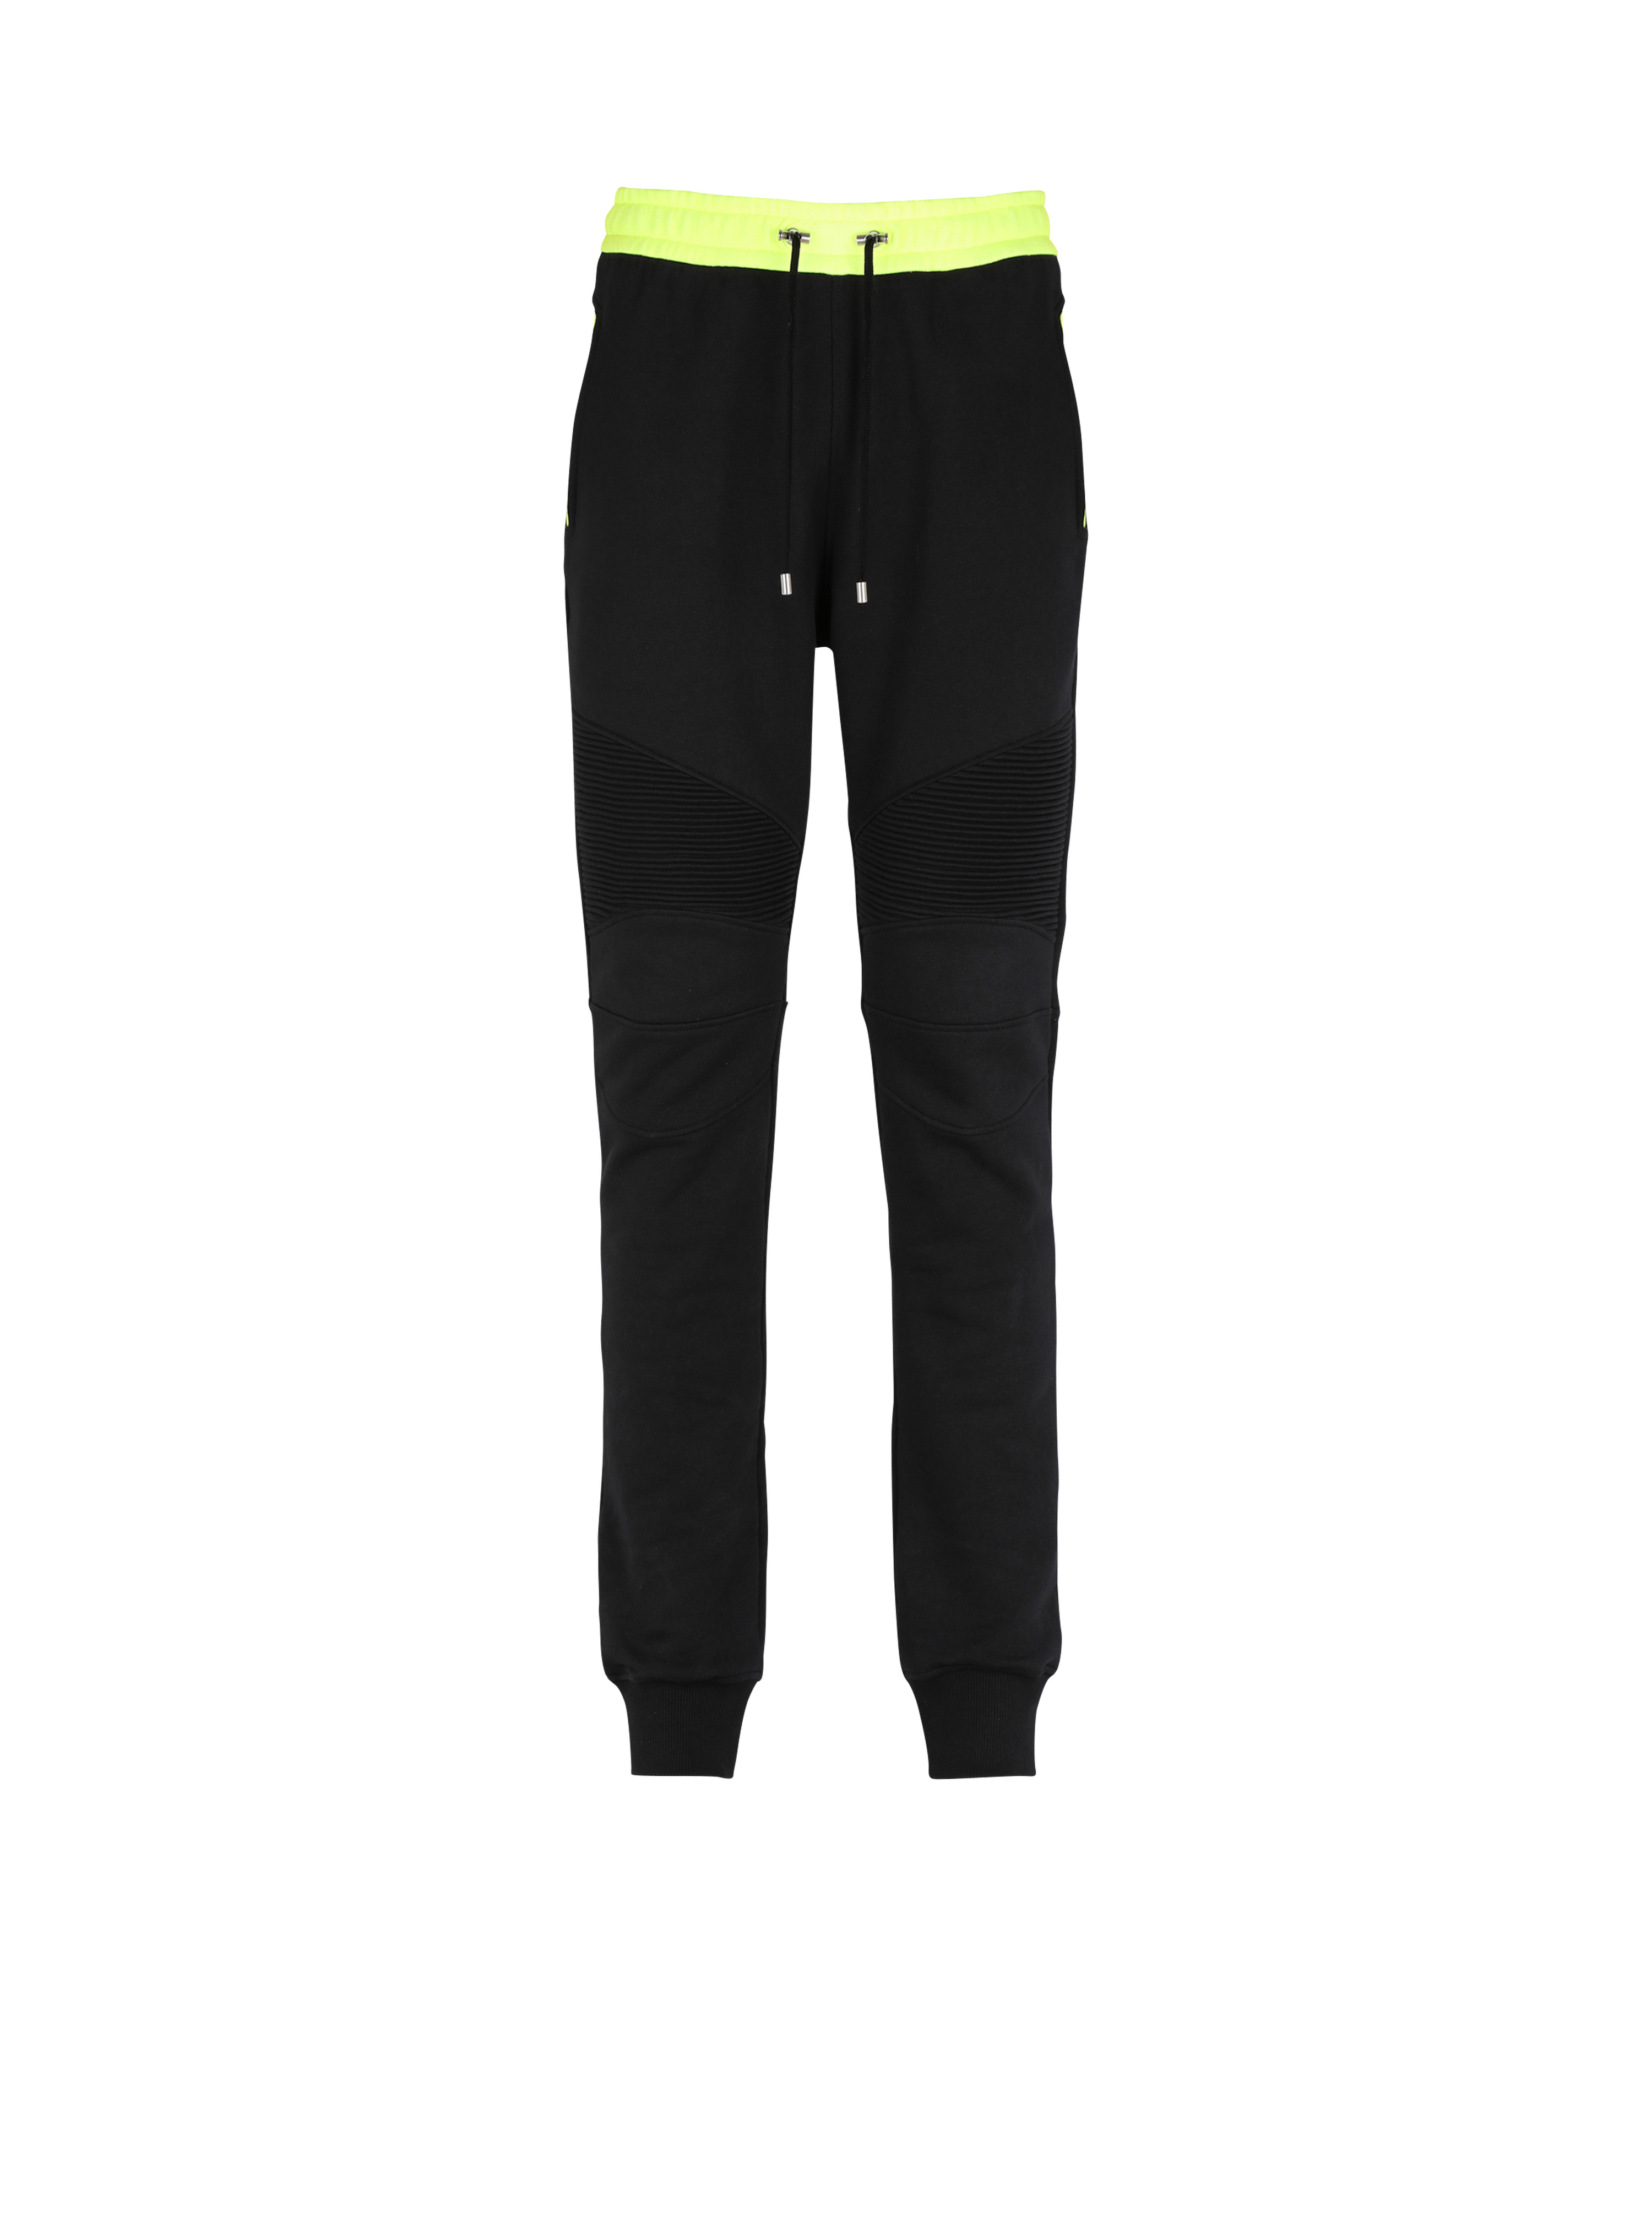 Capsule After ski - cotton sweatpants with Balmain Paris logo print, black